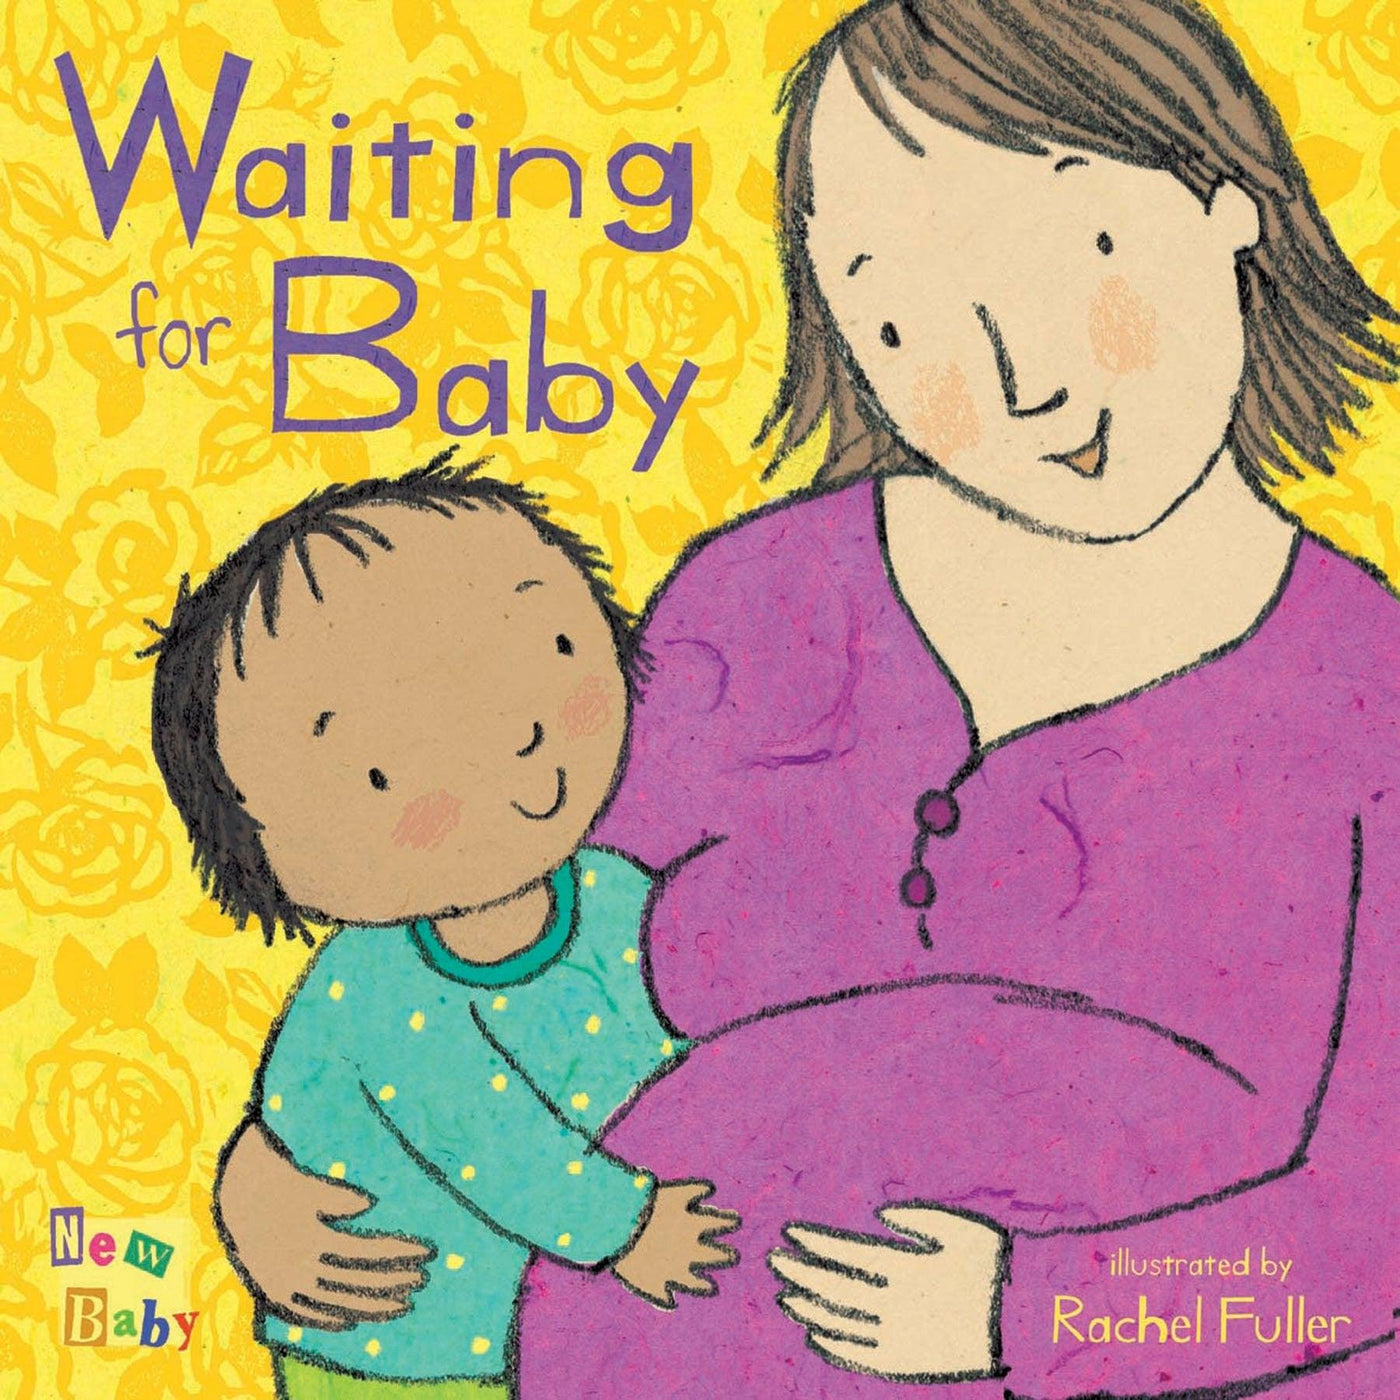 Waiting For Baby (New Baby) - Rachel Fuller